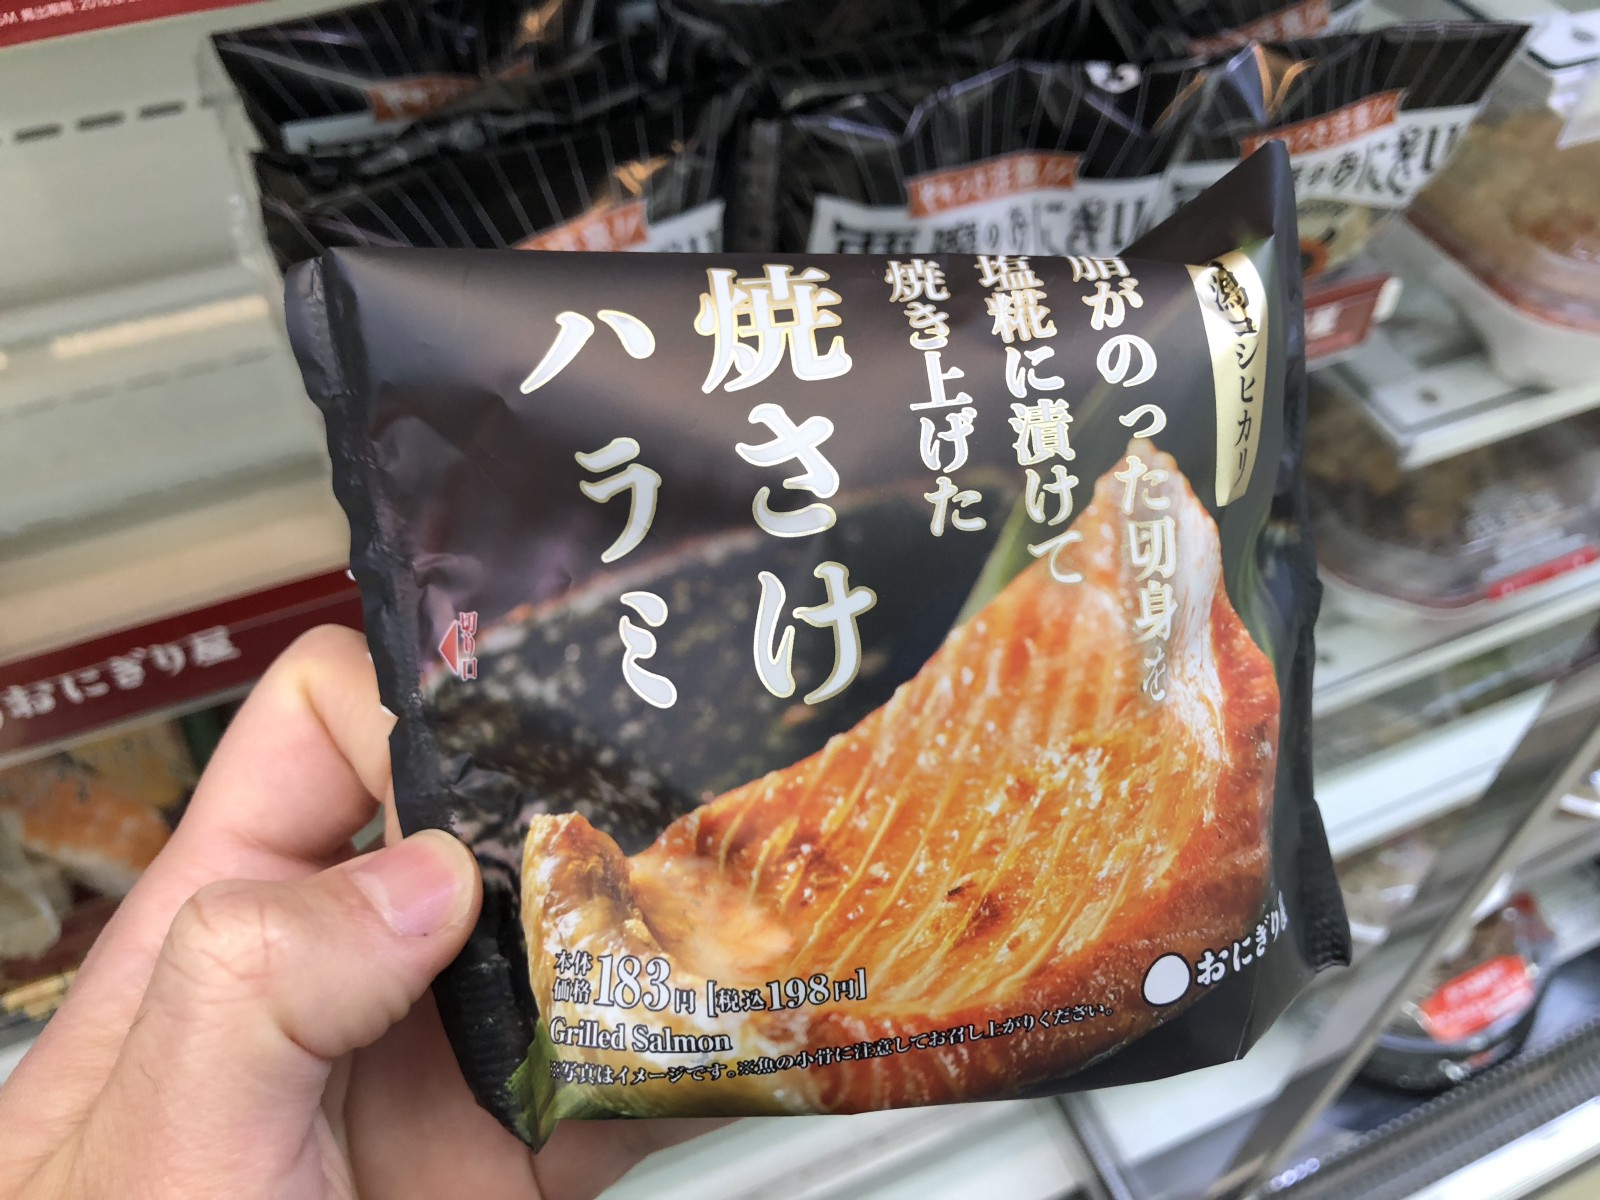 Grilled Salmon Onigiri 